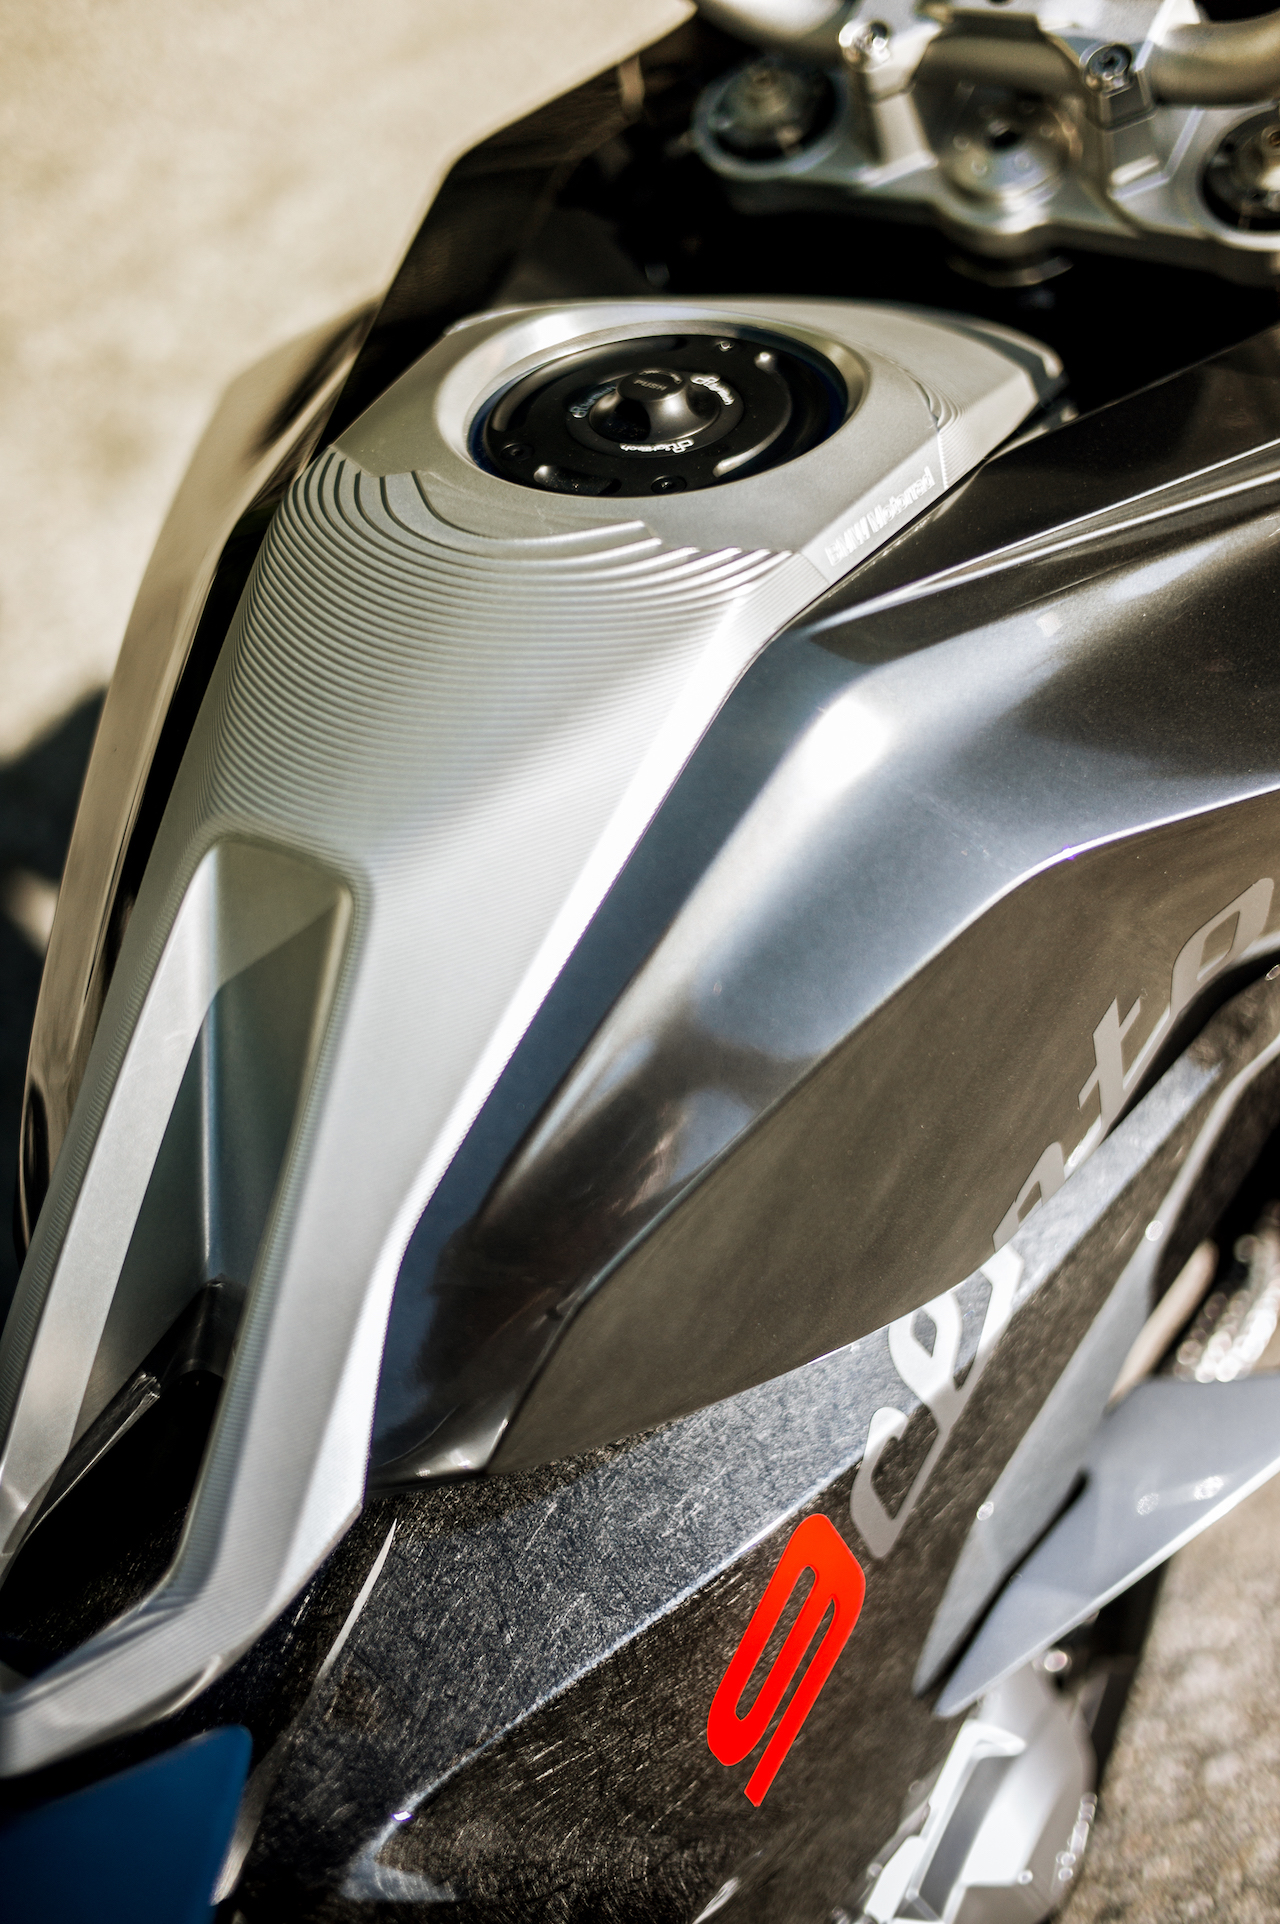 Concept BMW Motorrad 9cento